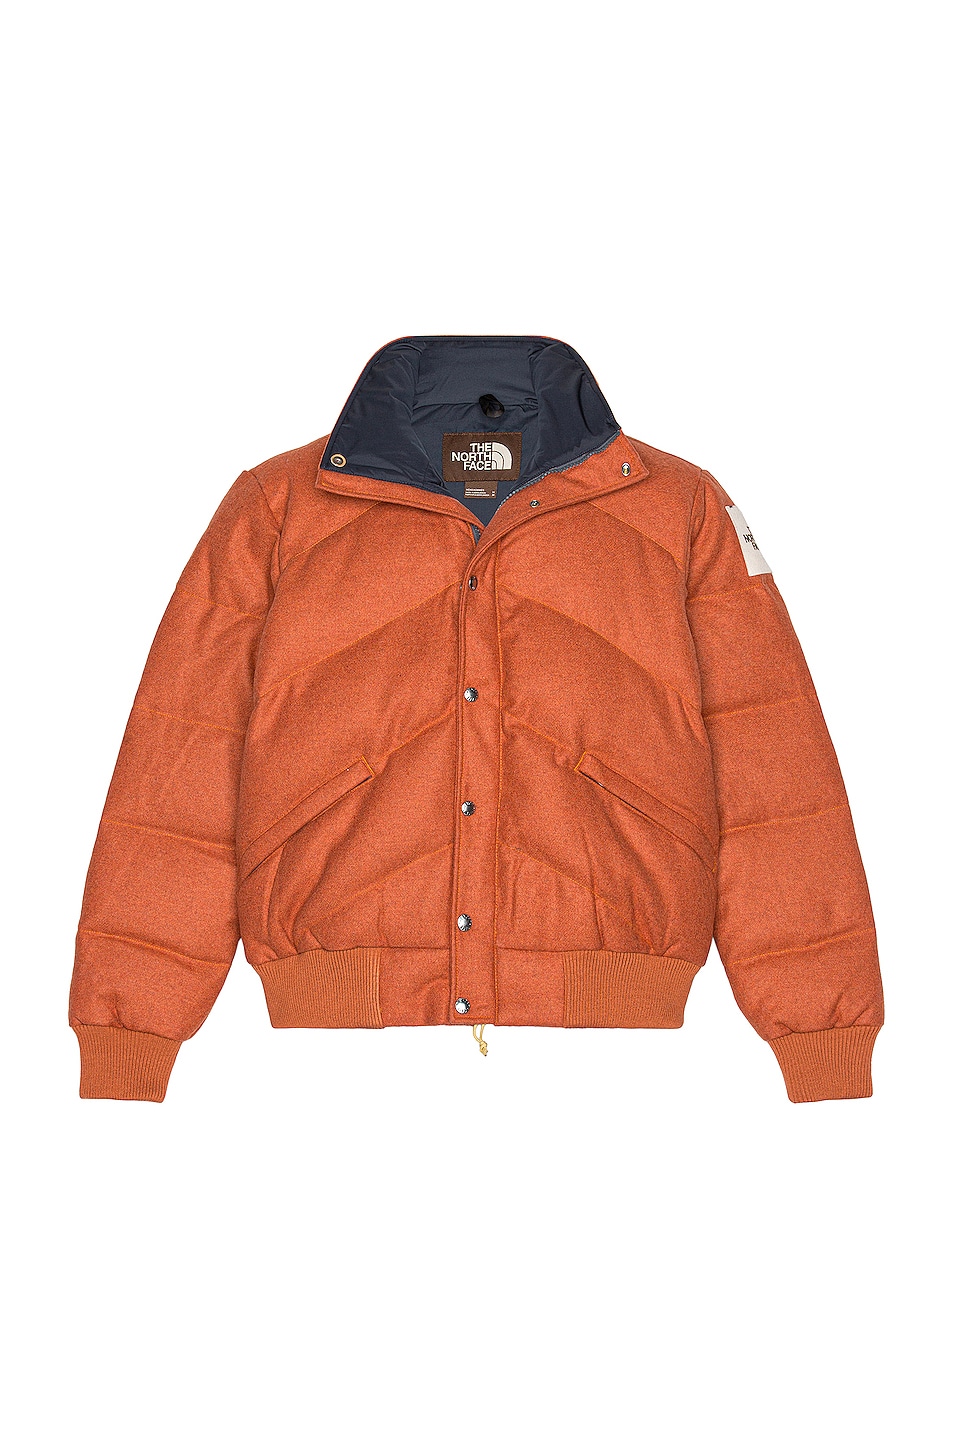 Image 1 of The North Face Brown Label Larkspur Jacket in Heritage Orange